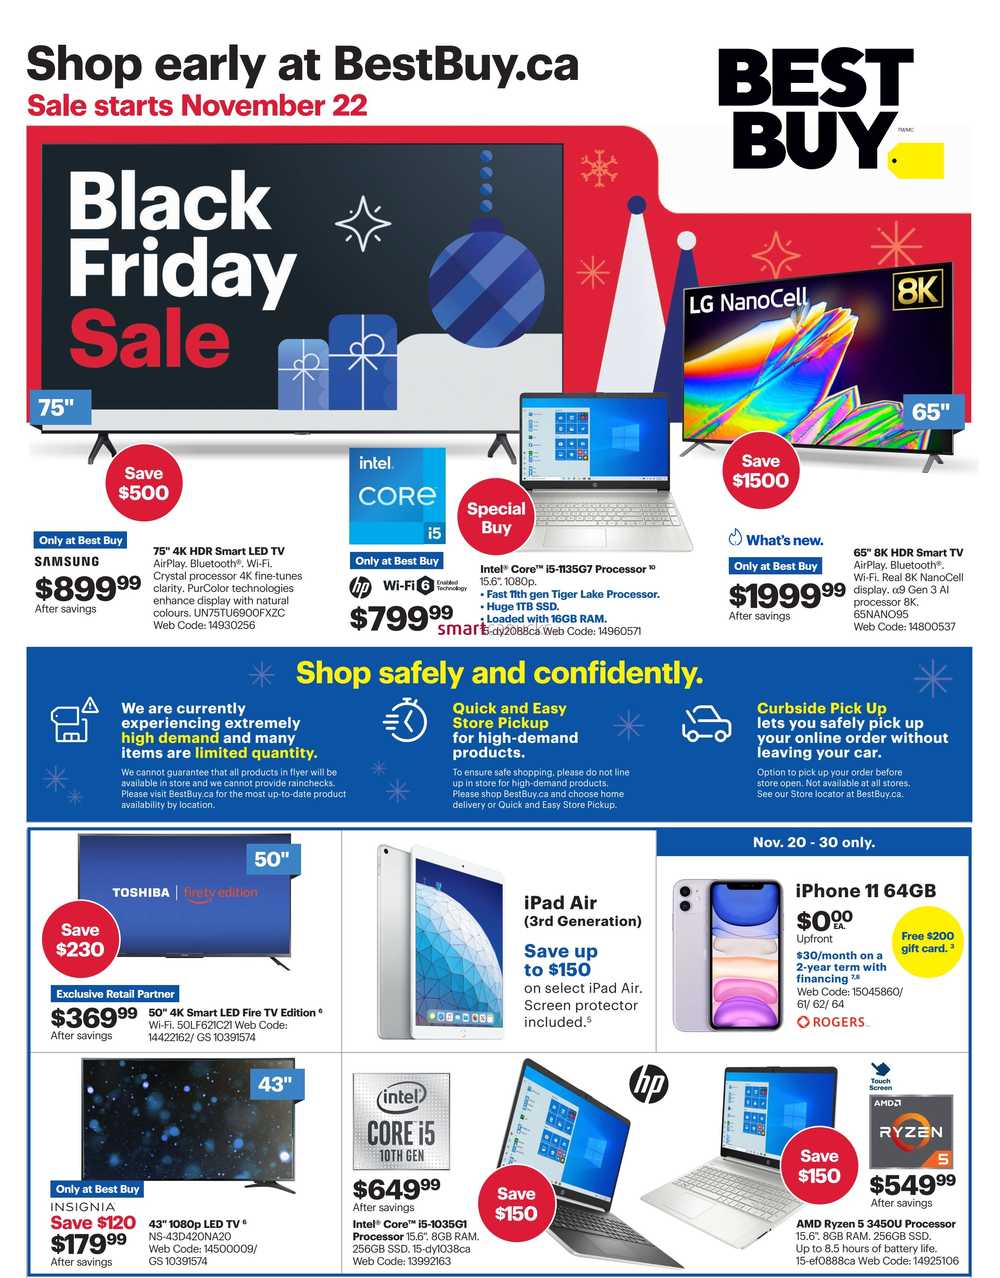 Best Buy Black Friday Flyer November 22 to December 3, 2020 - What To Buy On Black Friday Deals